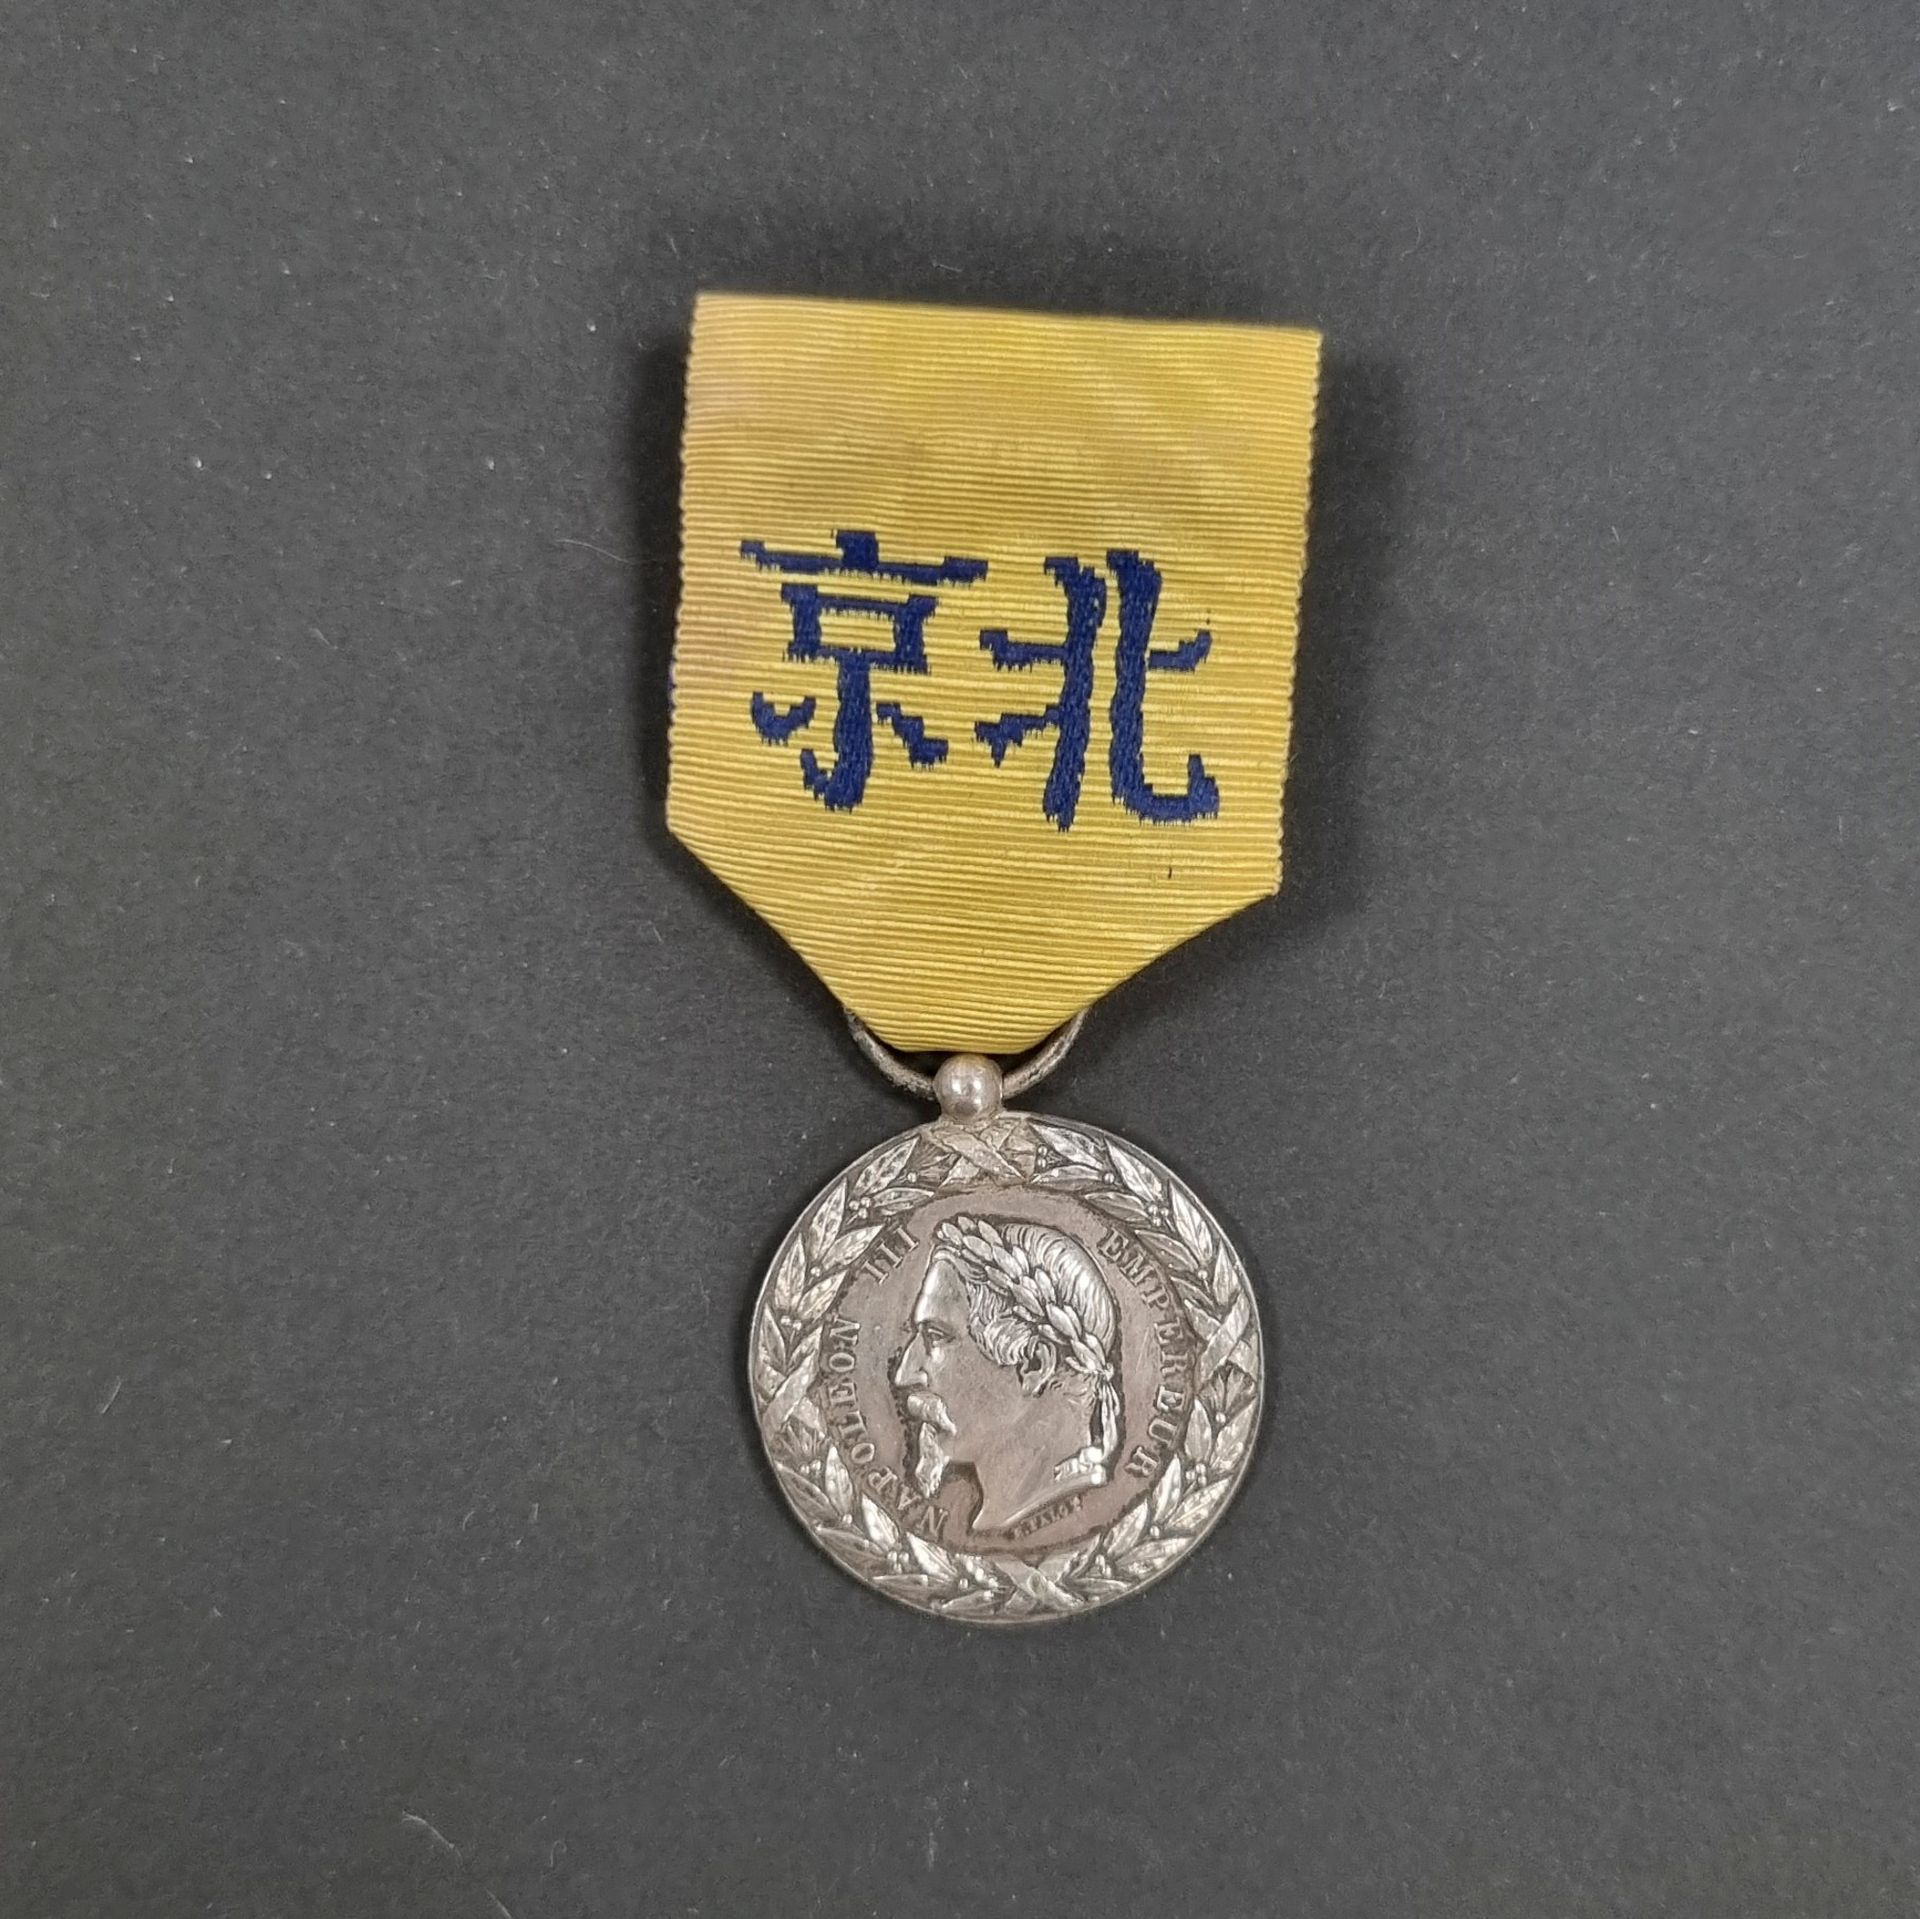 Null 法国 
中国战役奖章，由FALOT制作。
银制。旧丝带。球状扣（已裂开）。
野猪头印记。
30毫米 - 净重：12.6克 
T.B.至T.T.B.